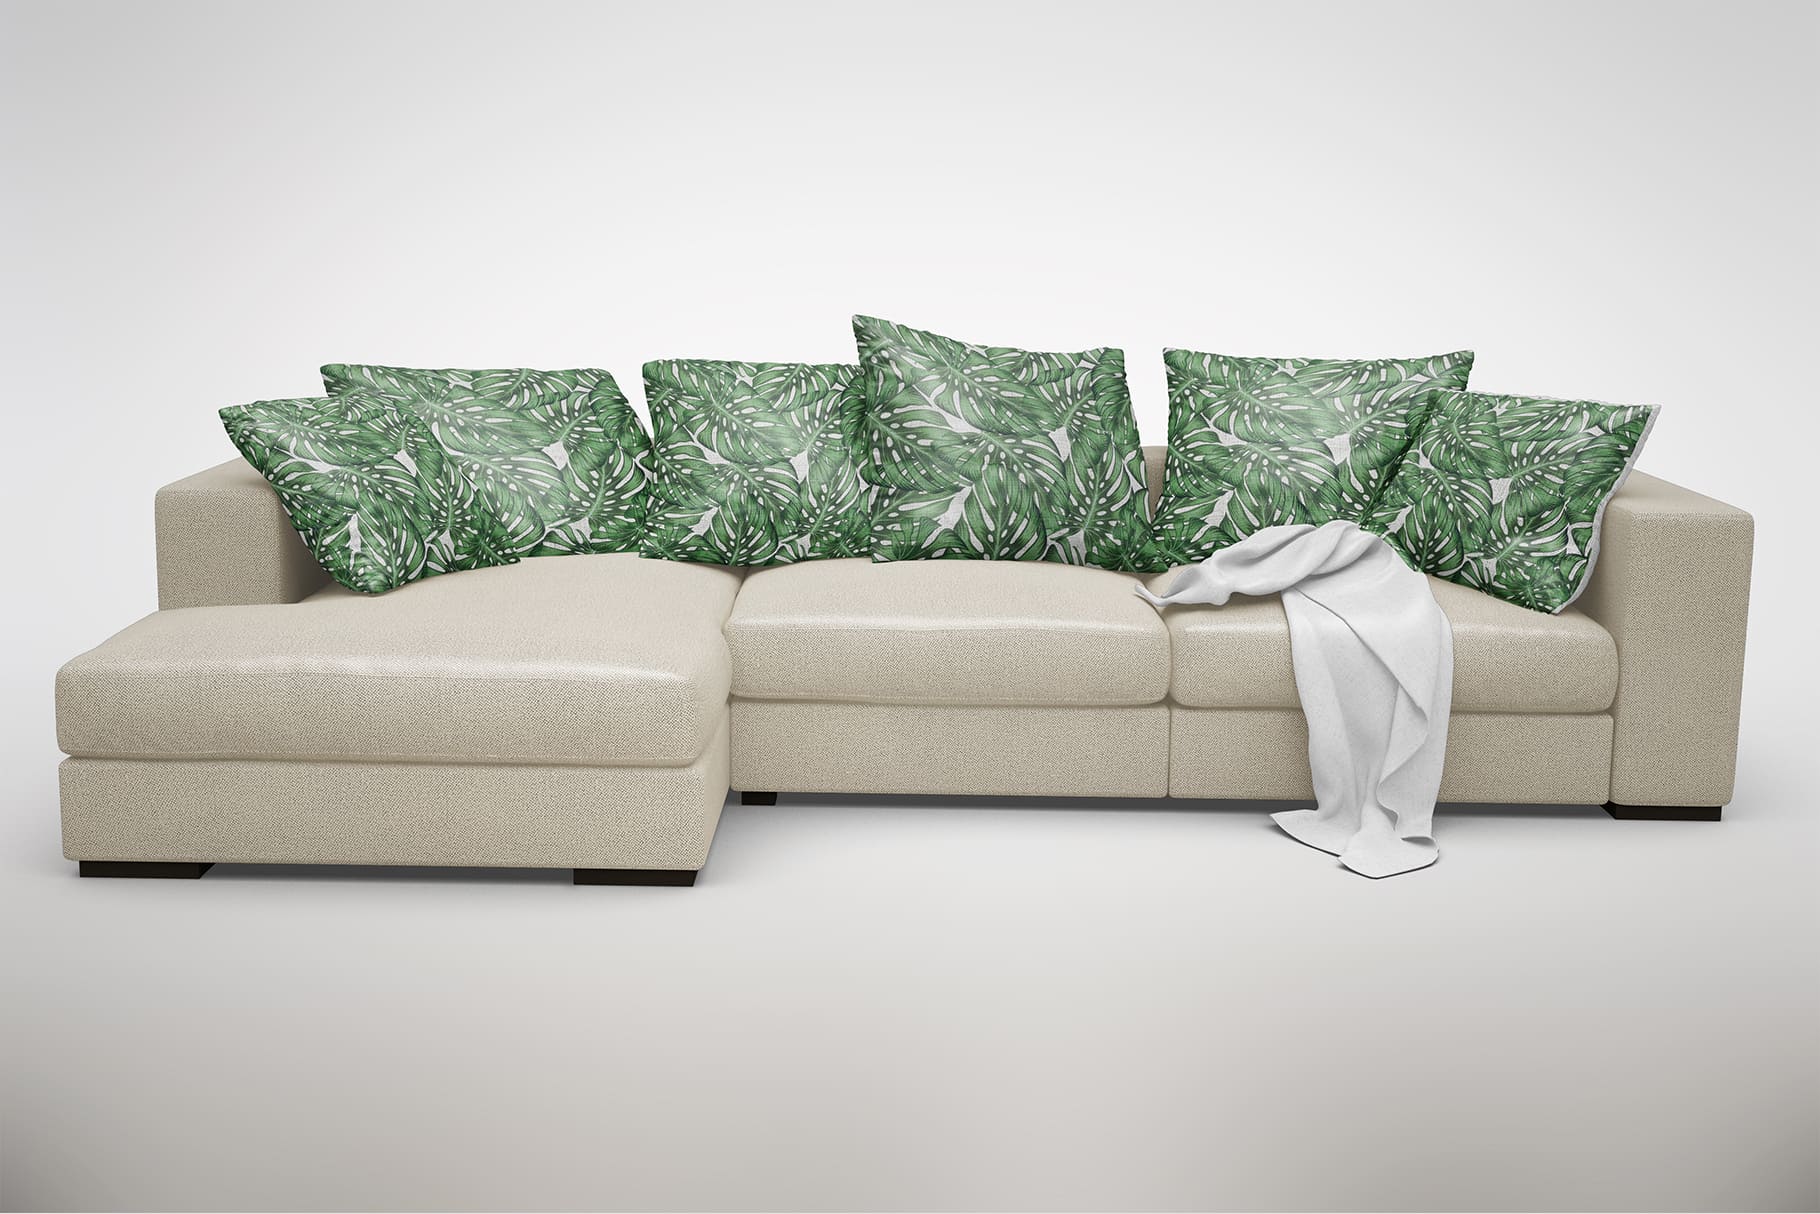 Large beige corner sofa with decorative cushions depicting a green leaf.